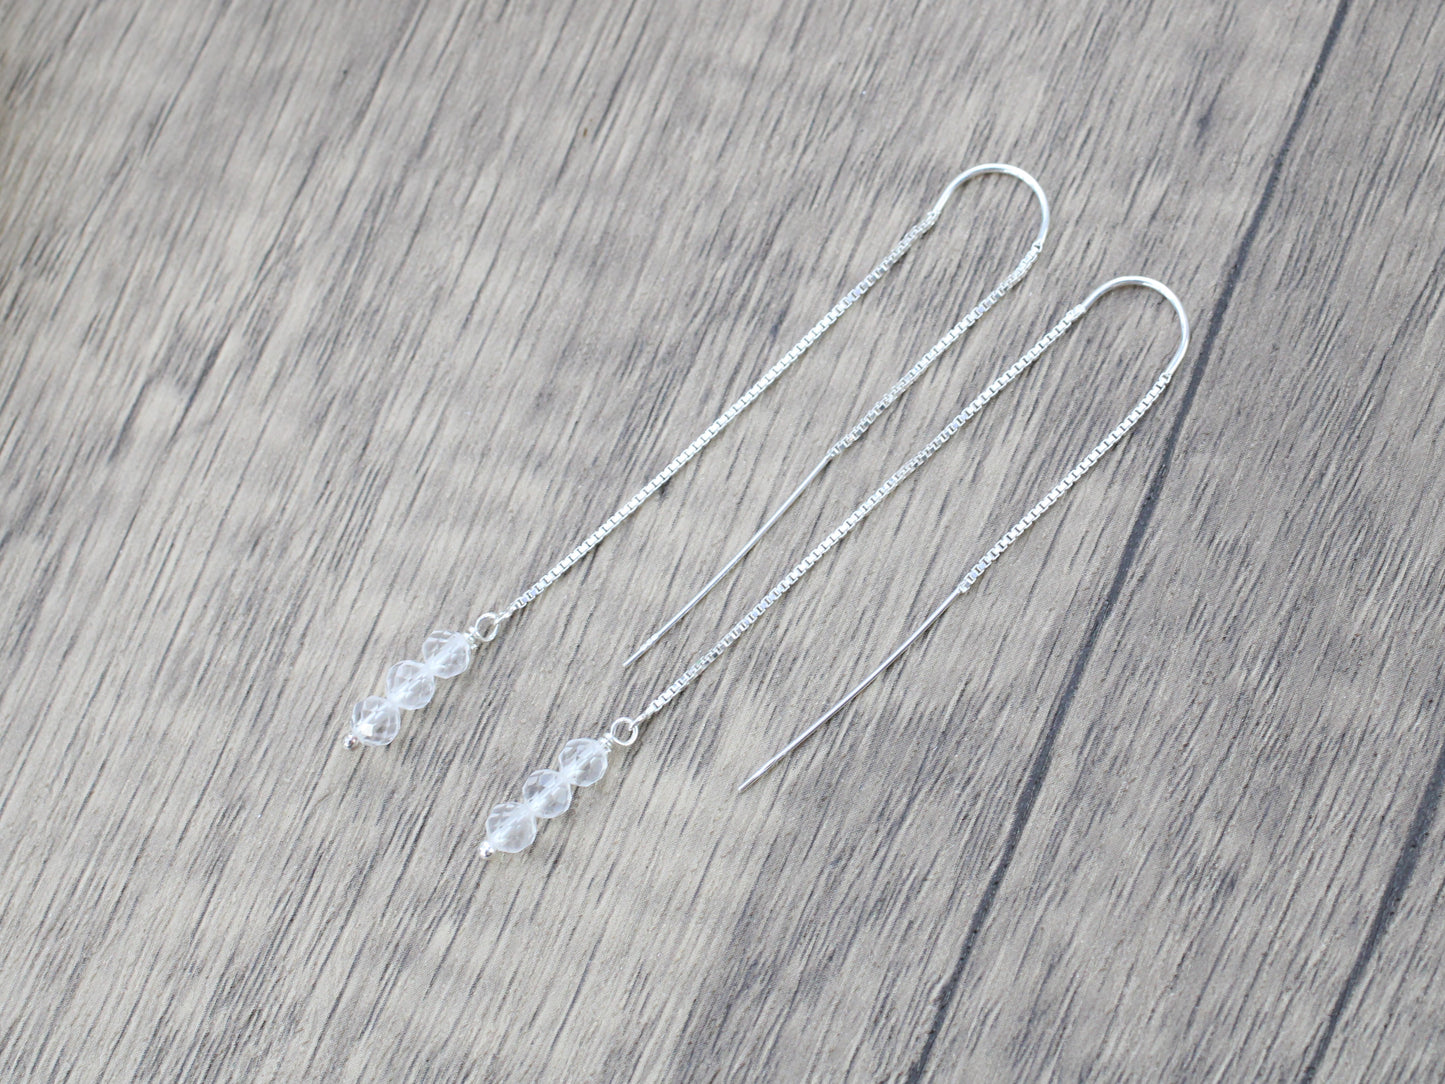 crystal quartz threader earrings